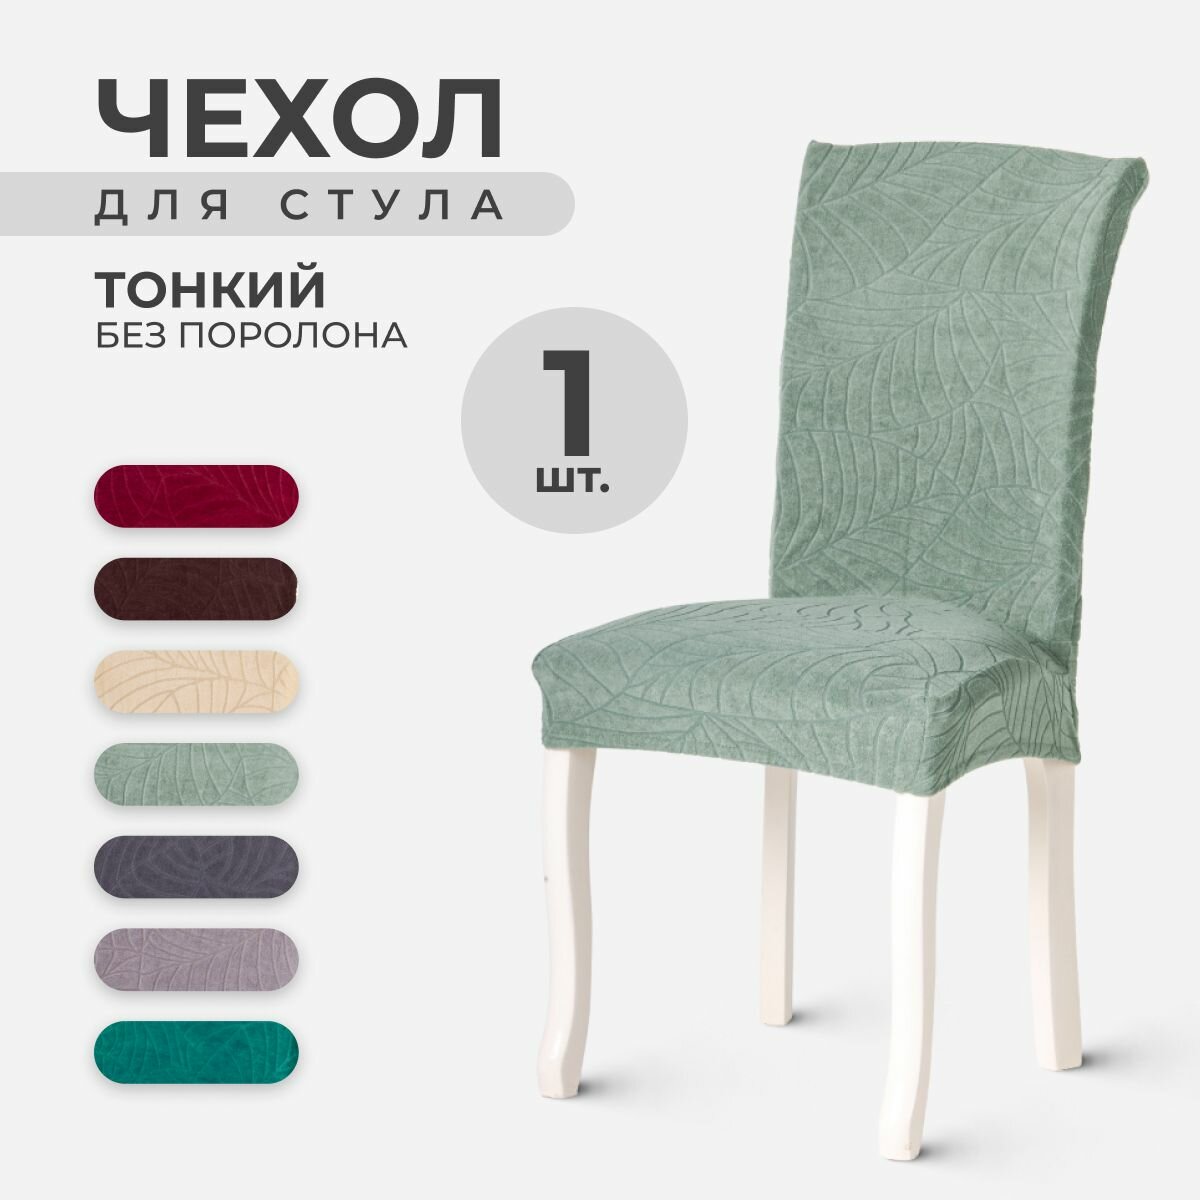 Чехол LuxAlto на стул со спинкой, ткань Leaves, Серо-Зеленый, 1 штука